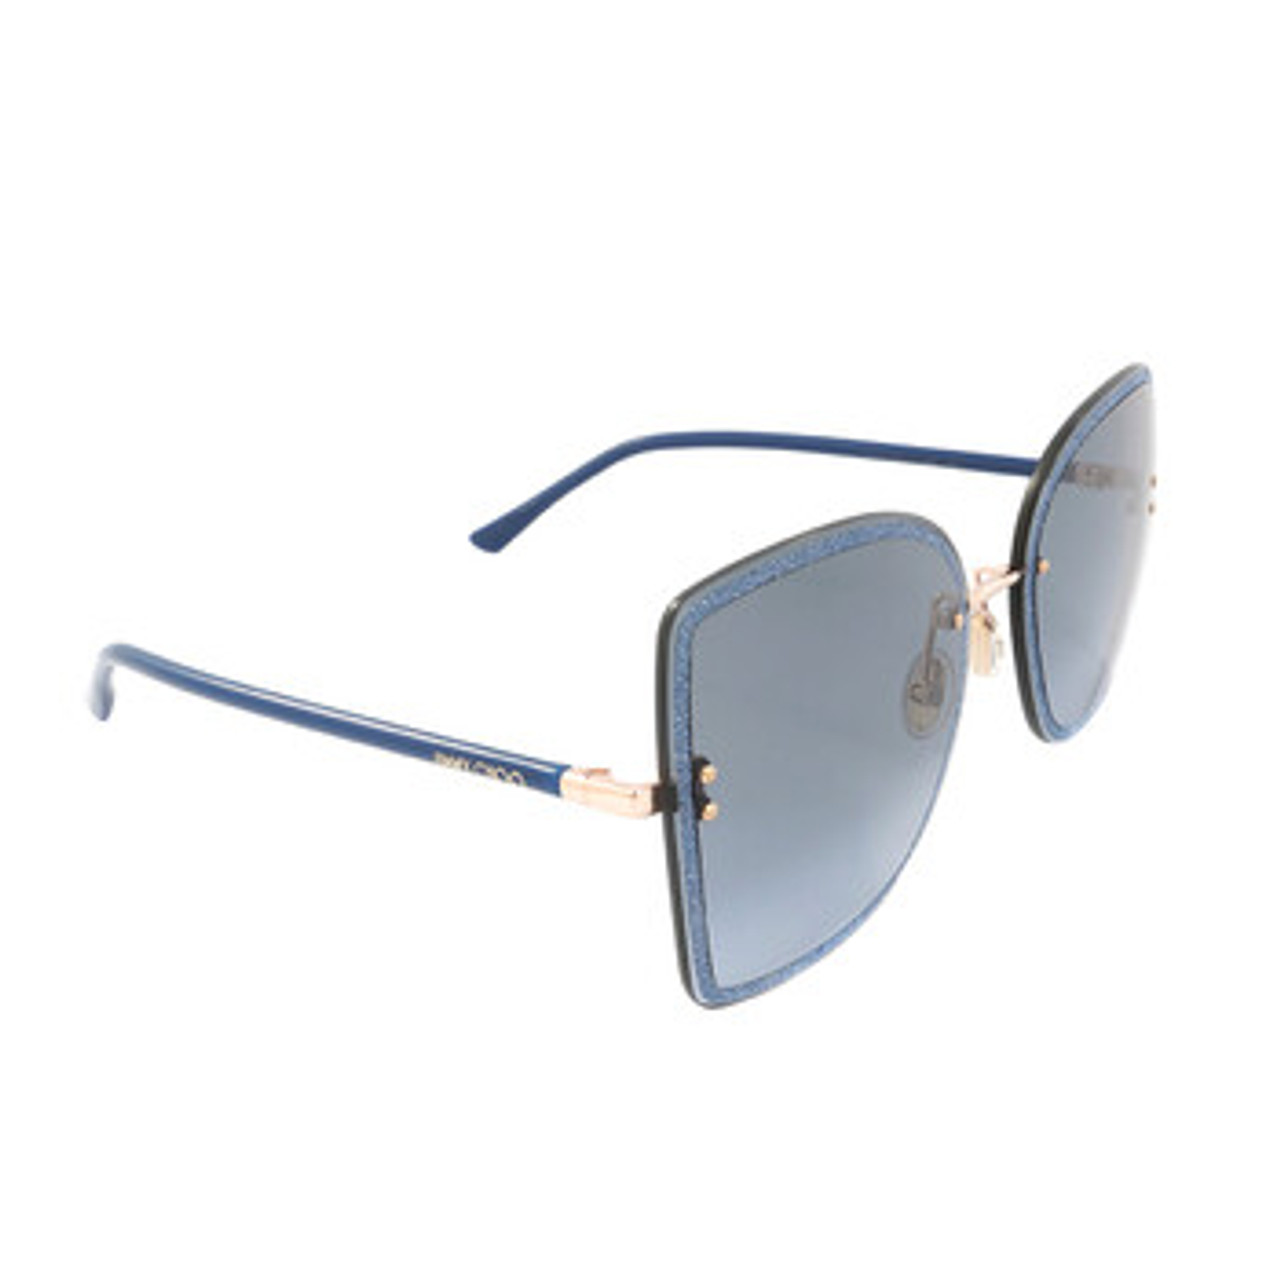 JIMMY CHOO IVE/S 7VLJJ Sunglasses Shades Frames BNIB Brand New in Case -  ITALY - GGV Eyewear